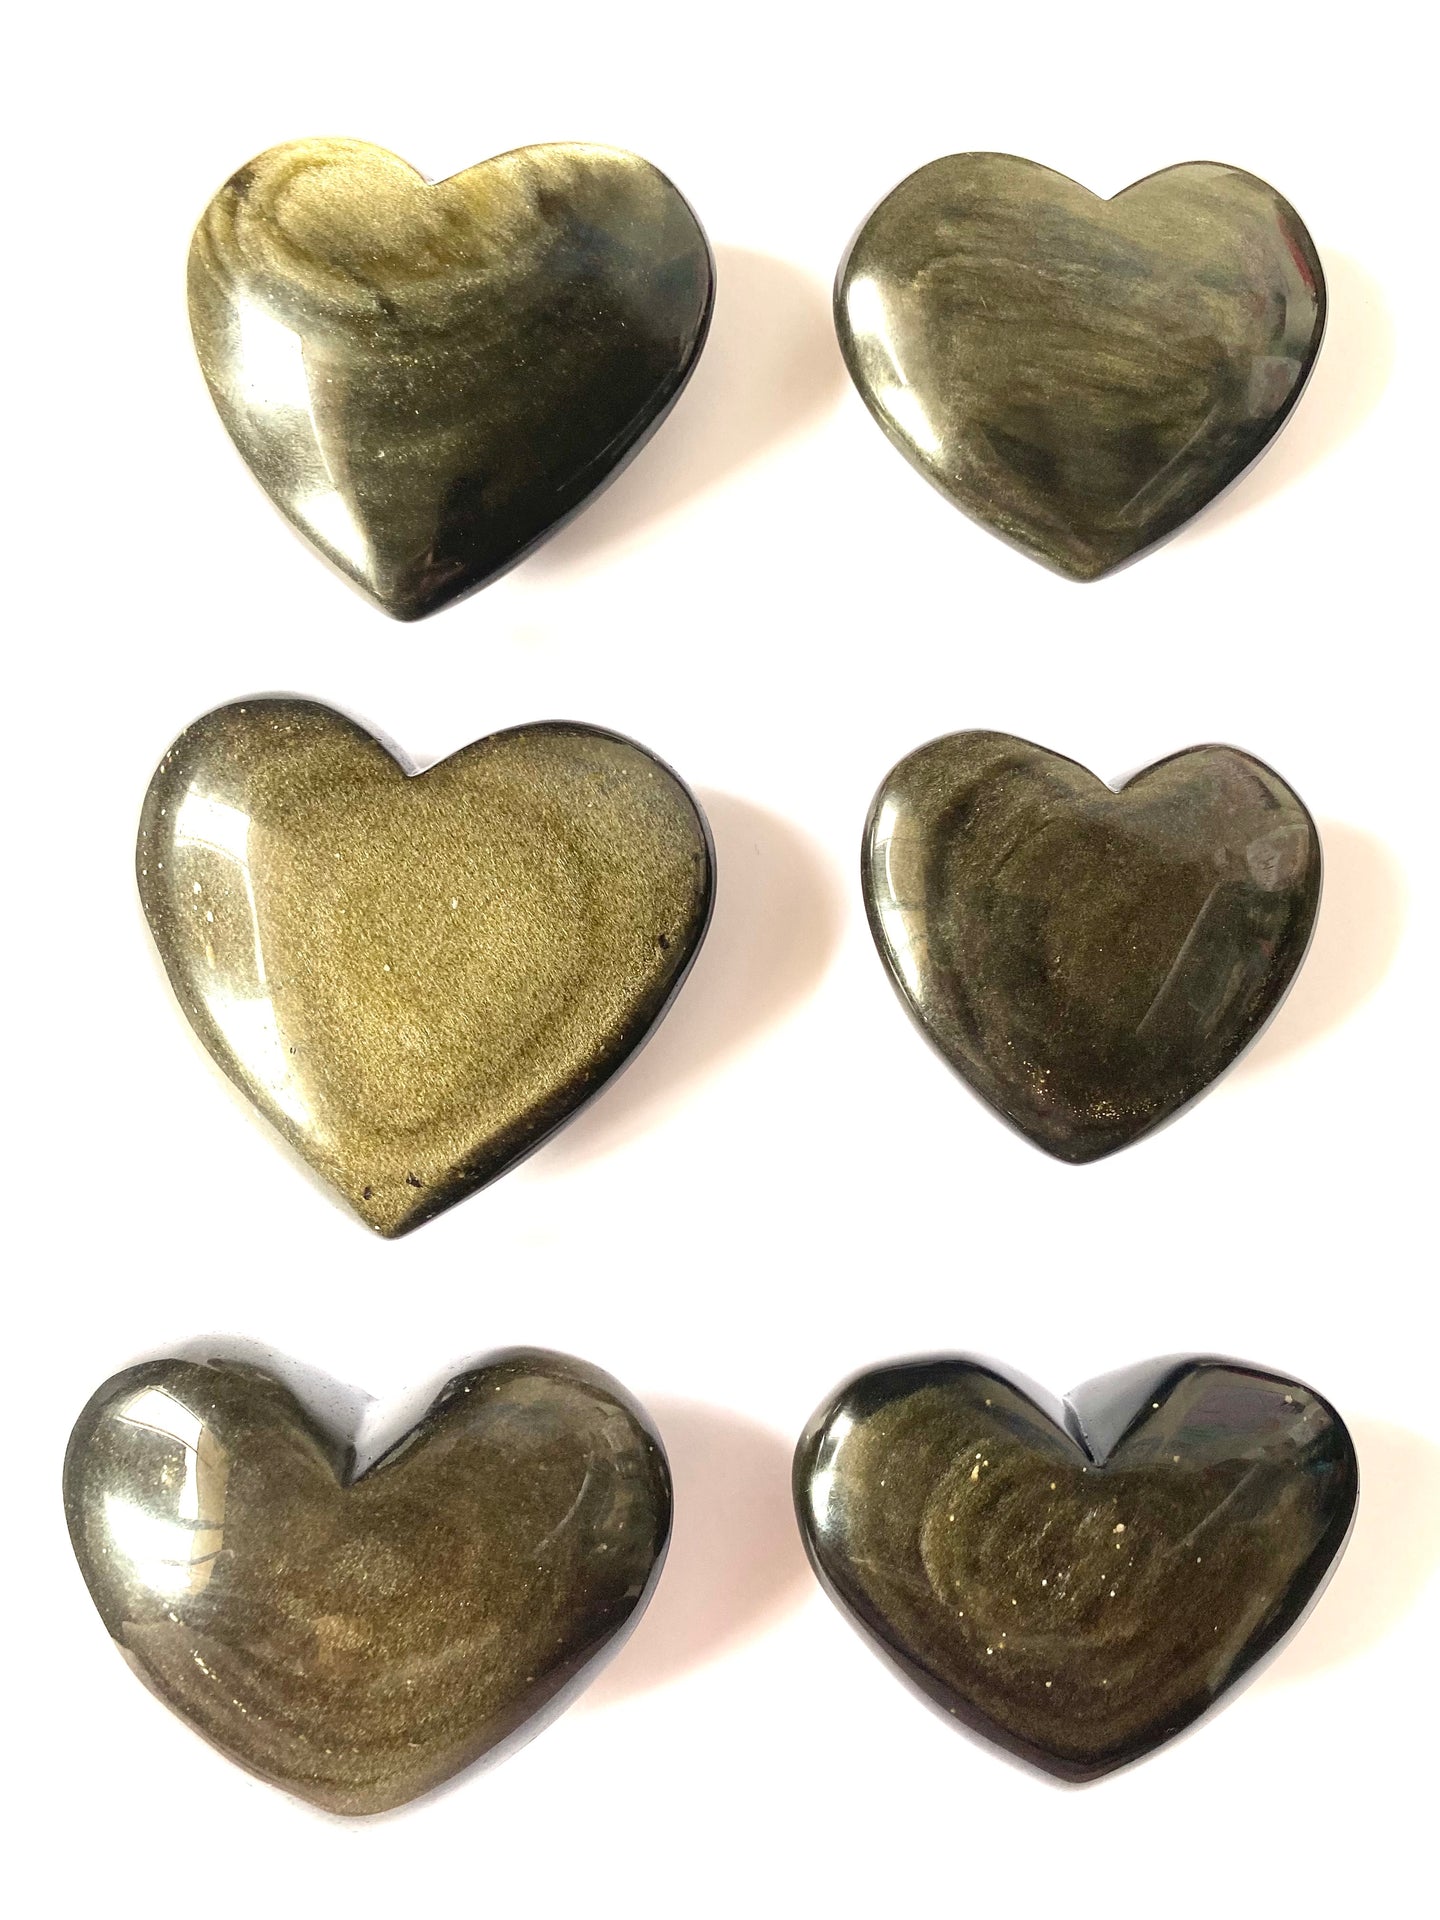 Gold sheen obsidian hearts